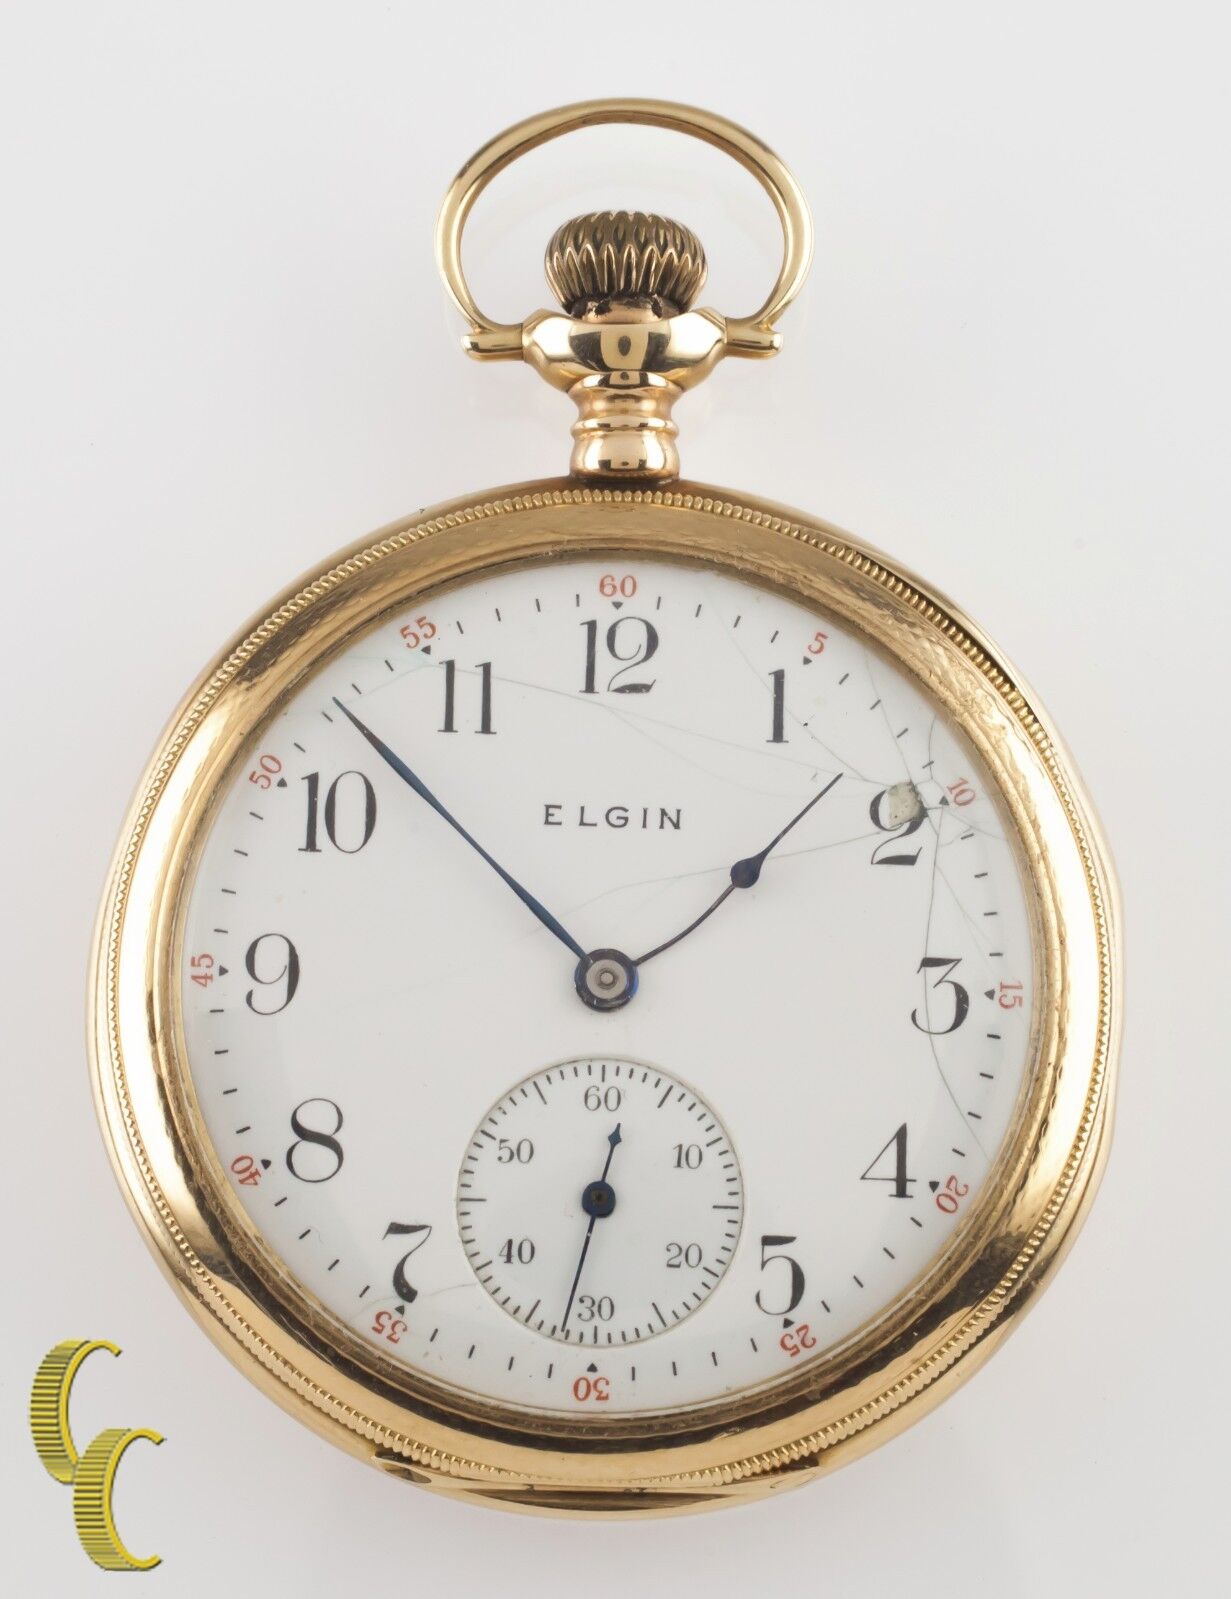 Elgin gold watches hornpub